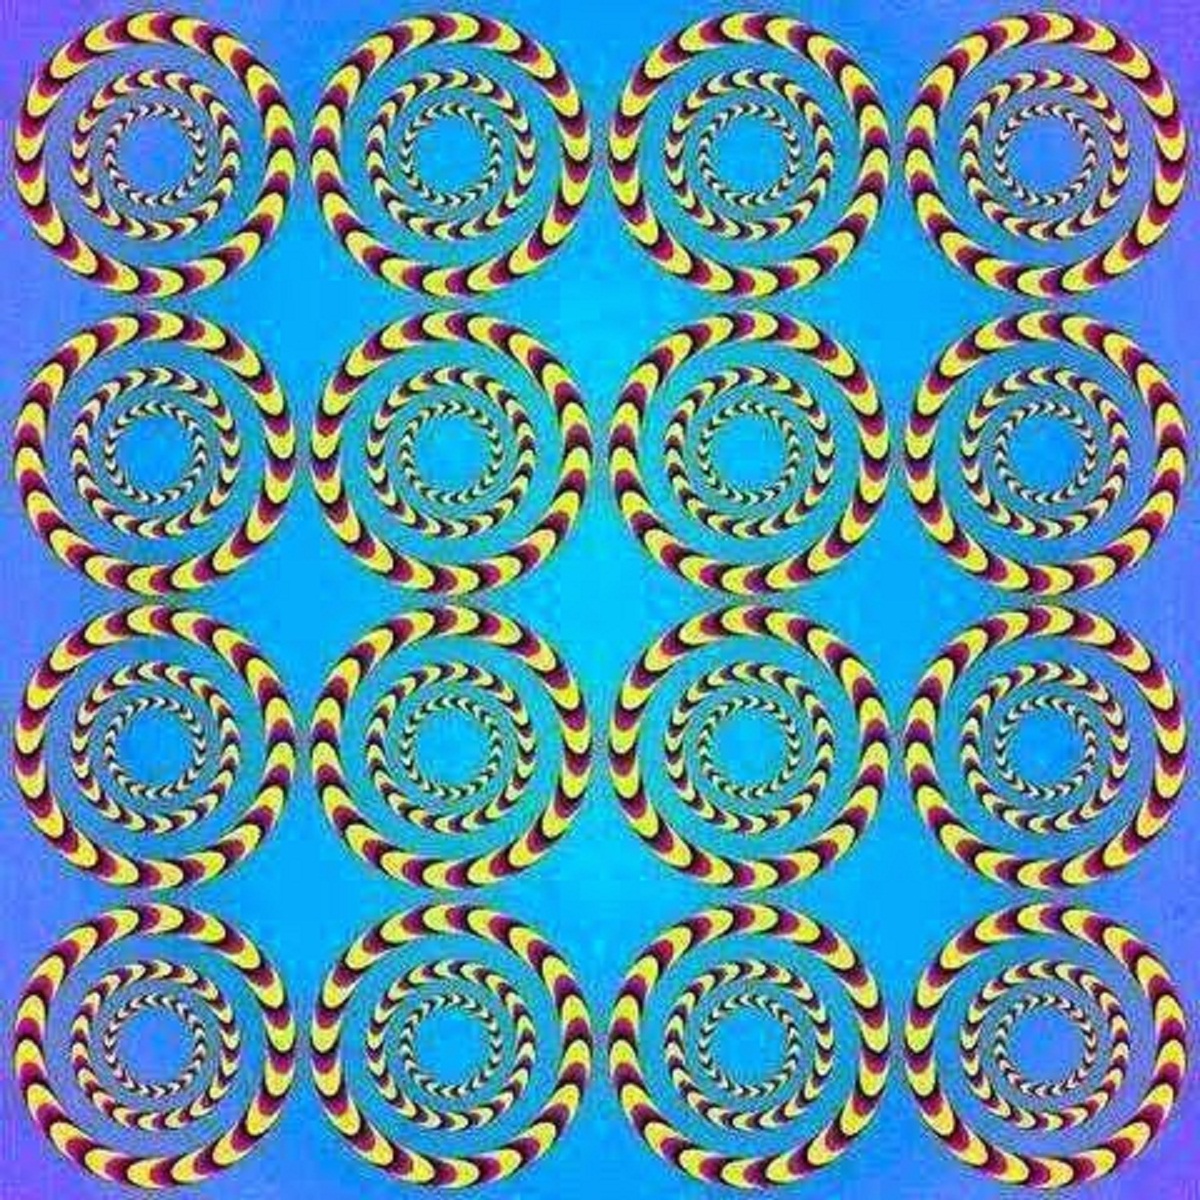 Concentric Circles Optical Illusion.jpg